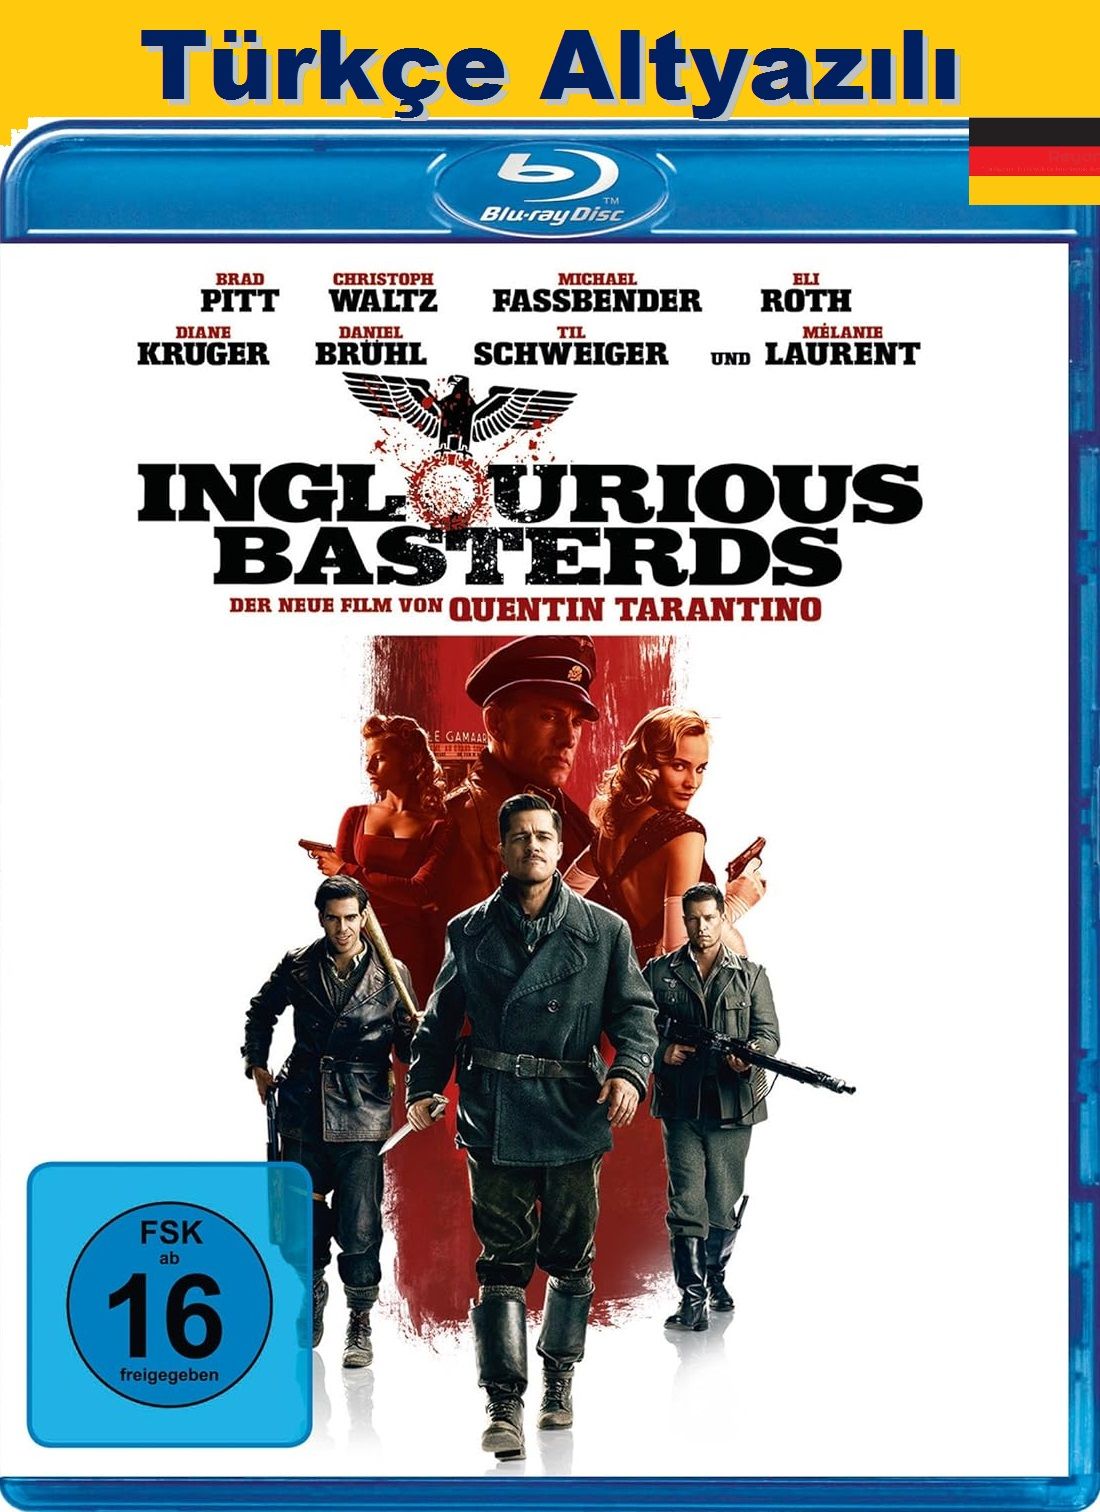 Inglourious Basterds - Soysuzlar Çetesi Blu-Ray